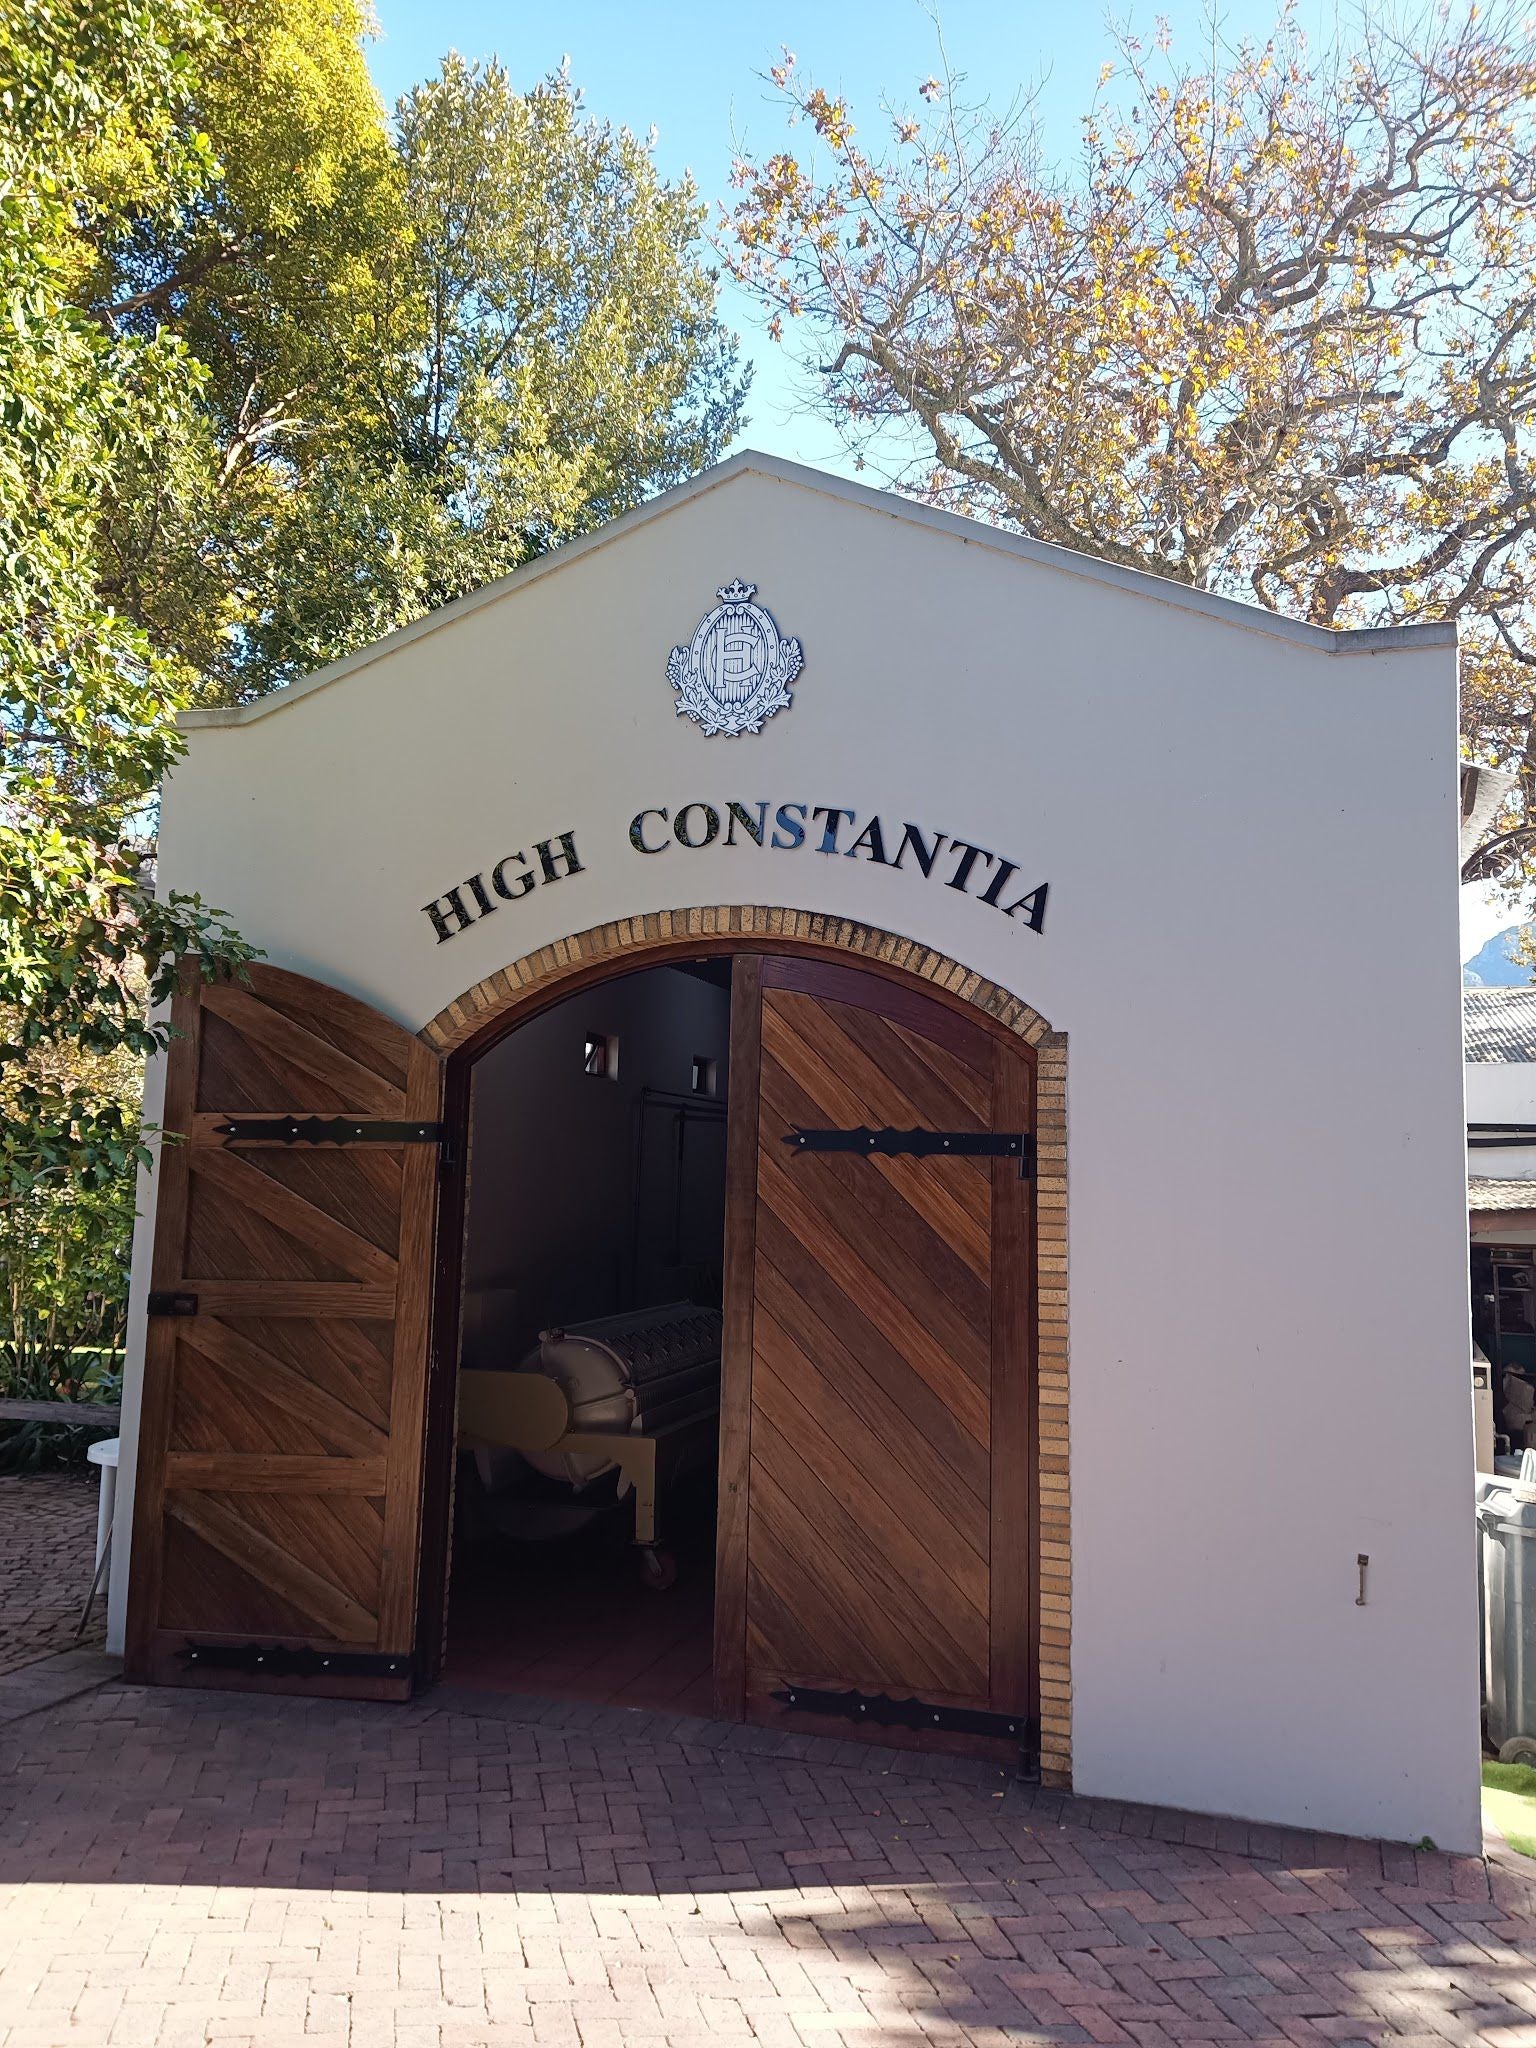  High Constantia Wine Cellar